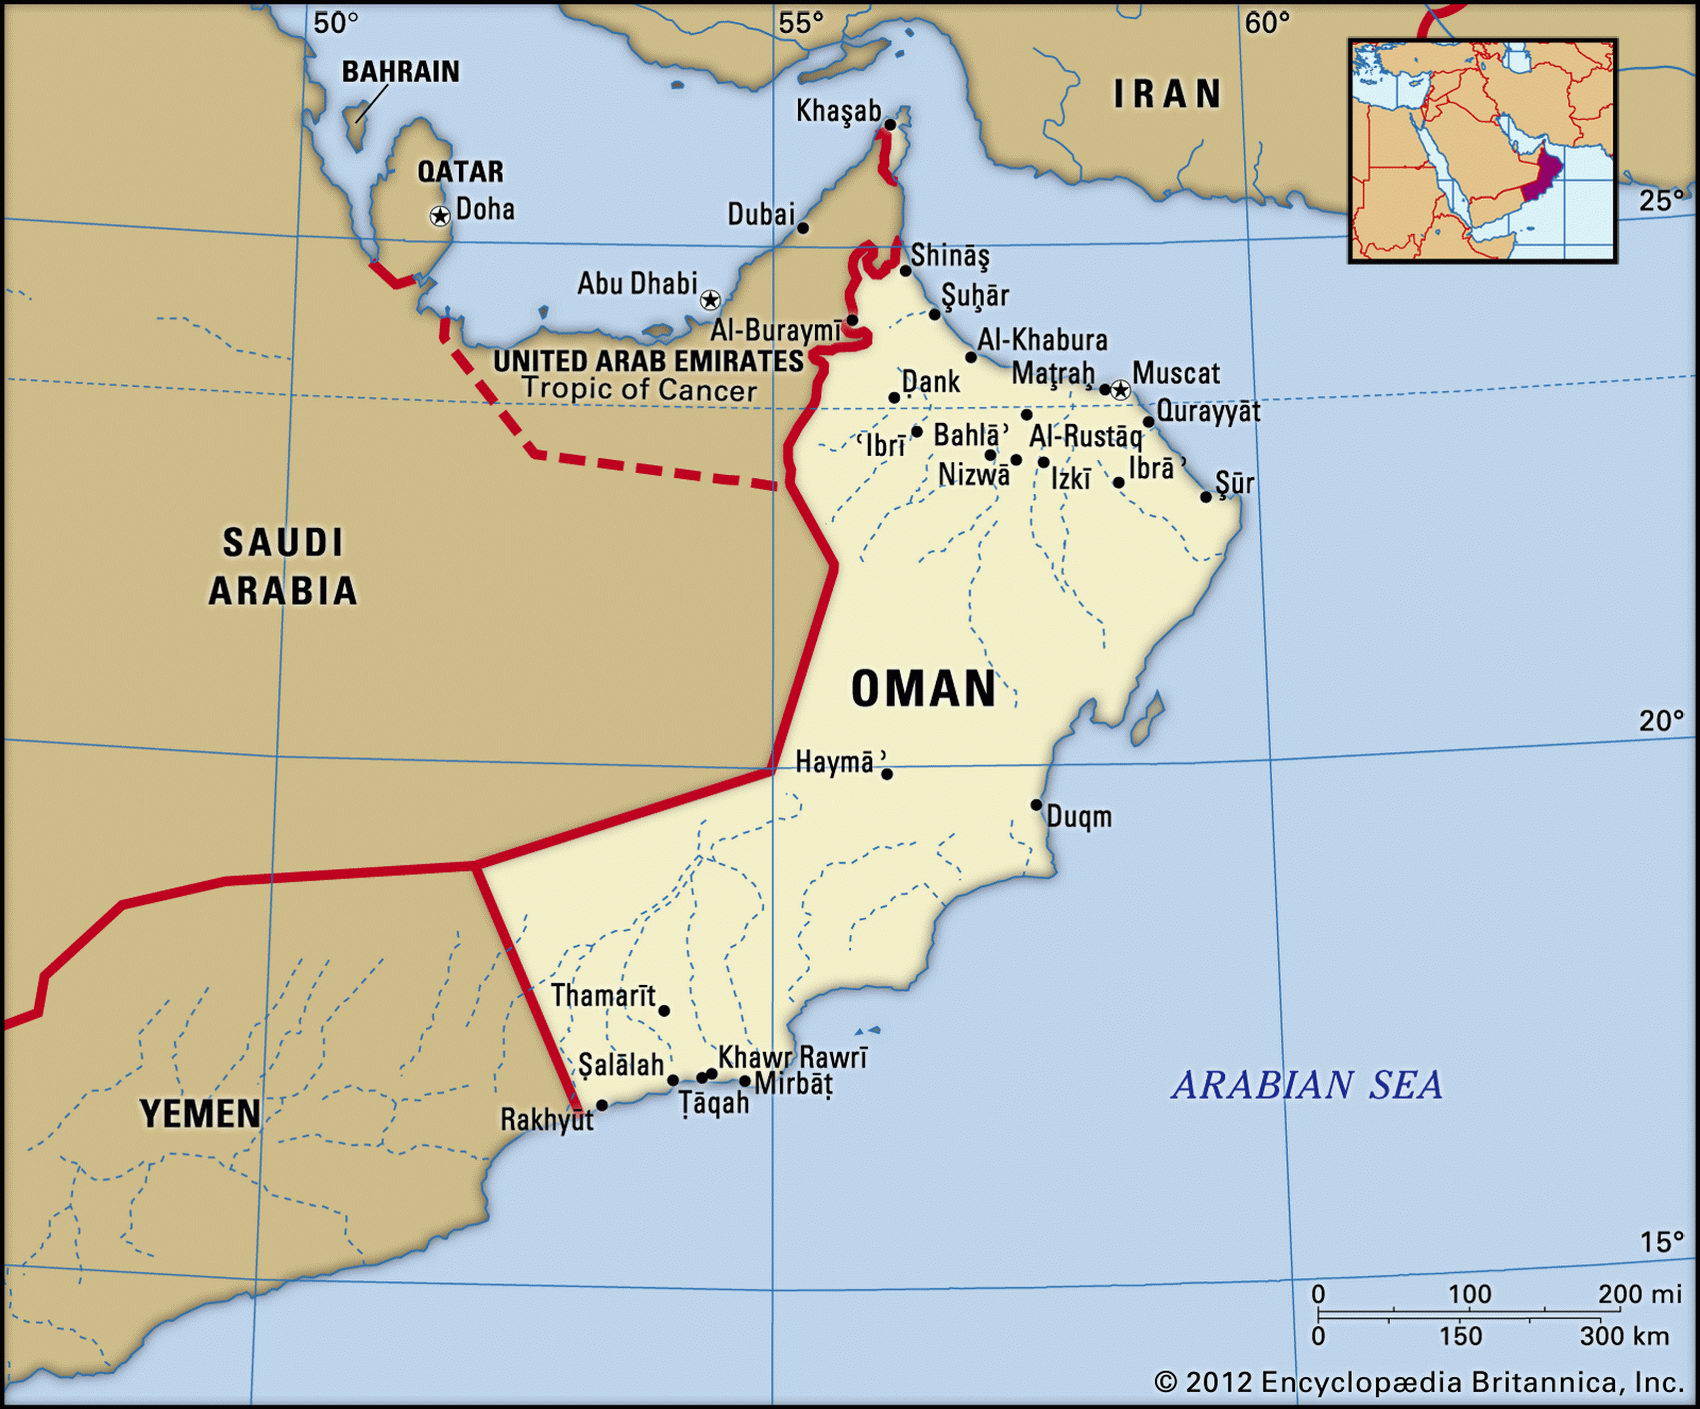 Оман на карте мира